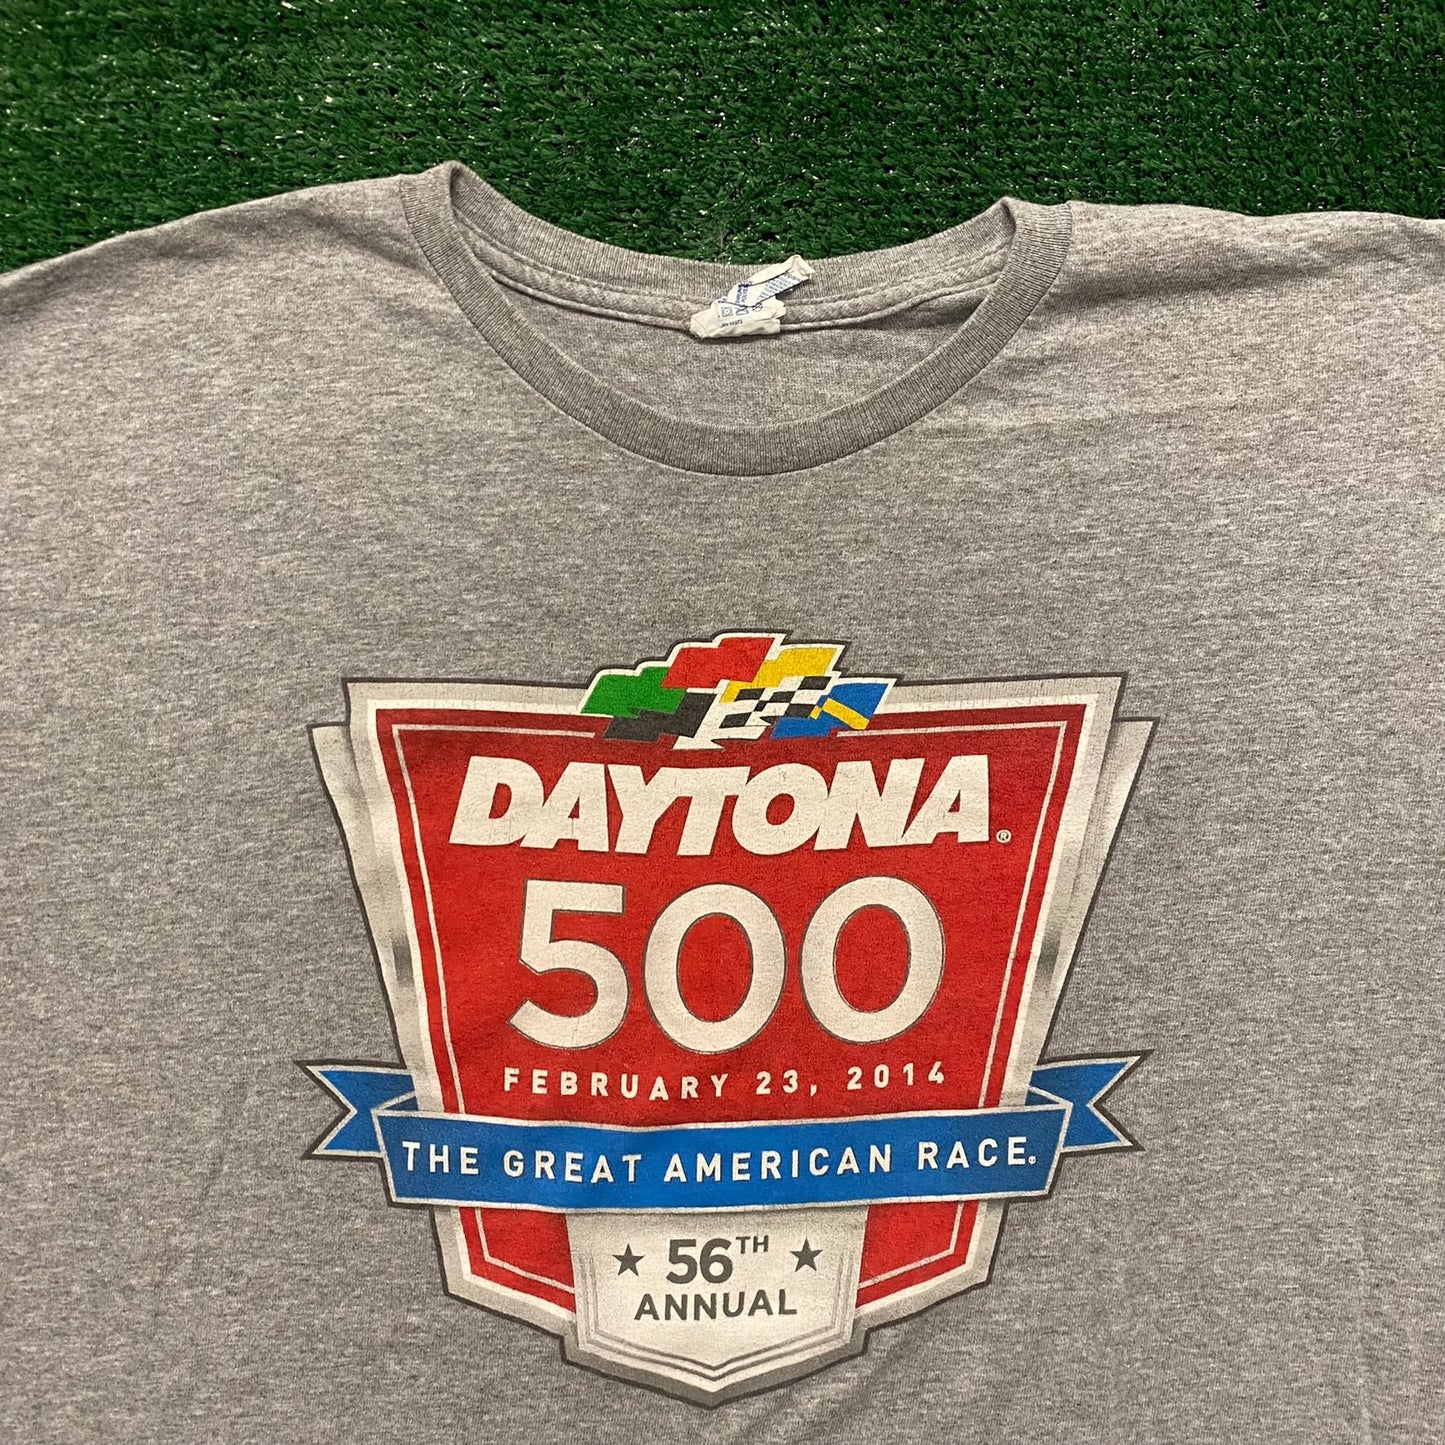 Daytona 500 Vintage NASCAR Racing T-Shirt